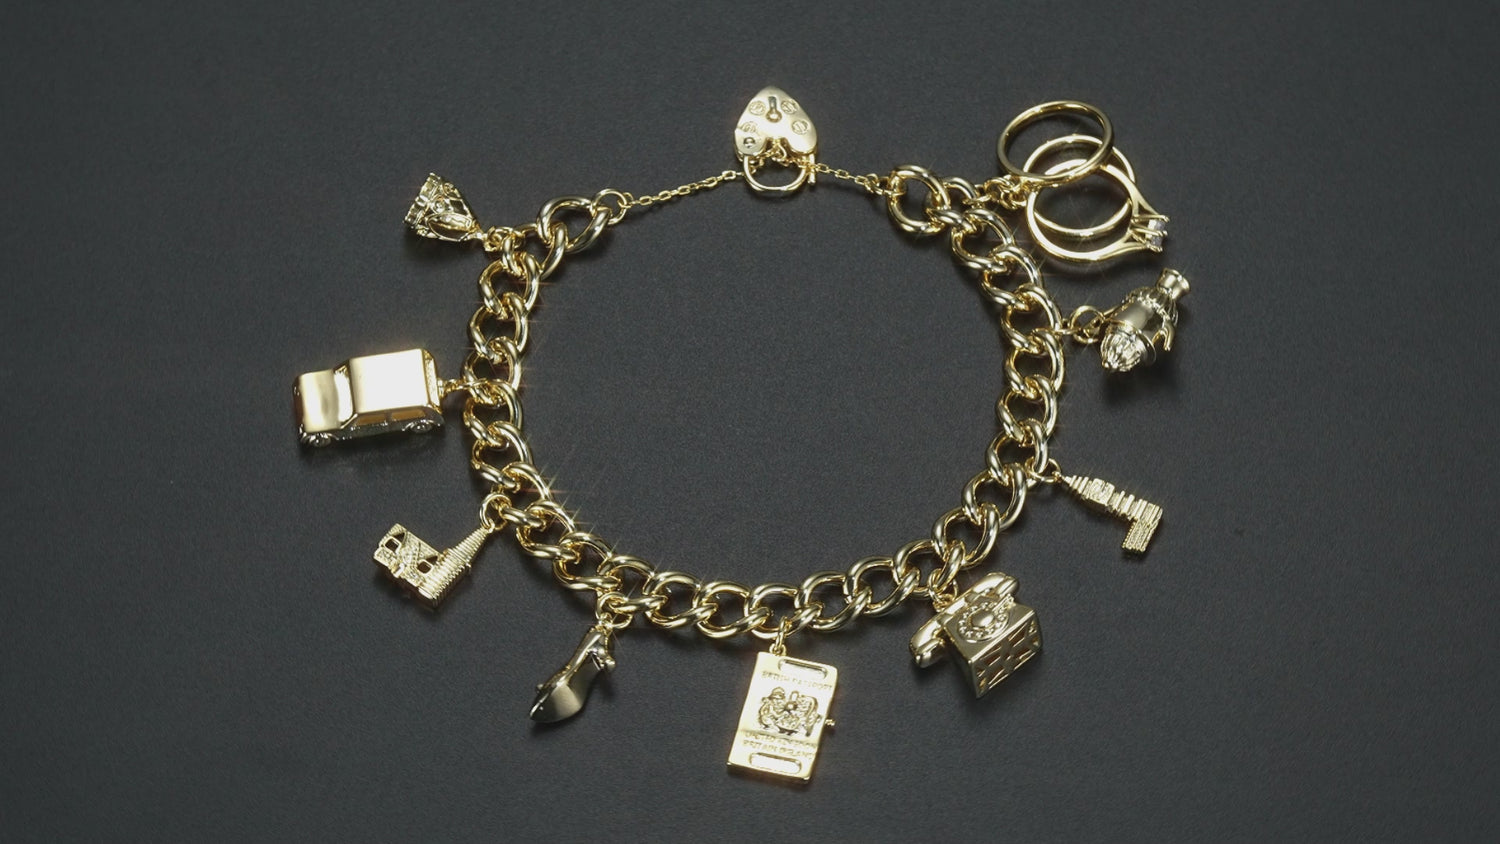 Luxury Gold Charm Bracelet Great Britain Heart Padlock